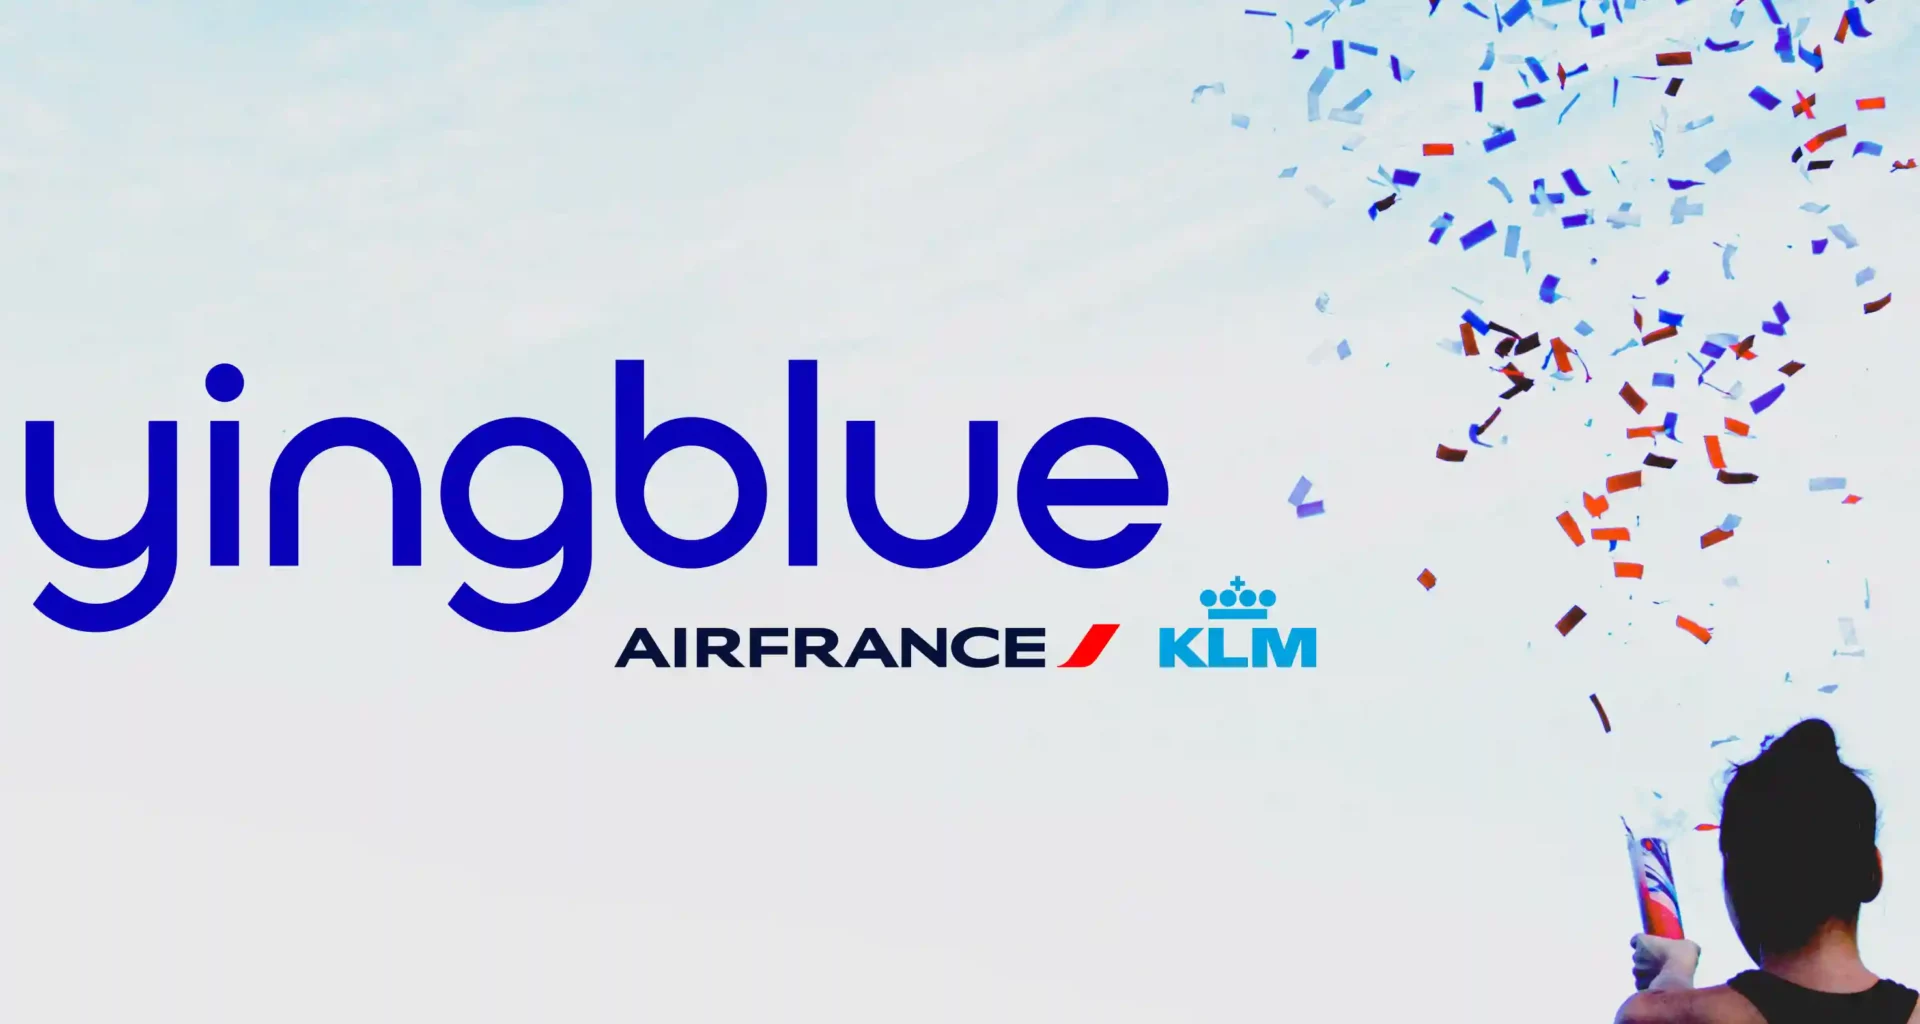 Flying Blue logo next to person celebrating